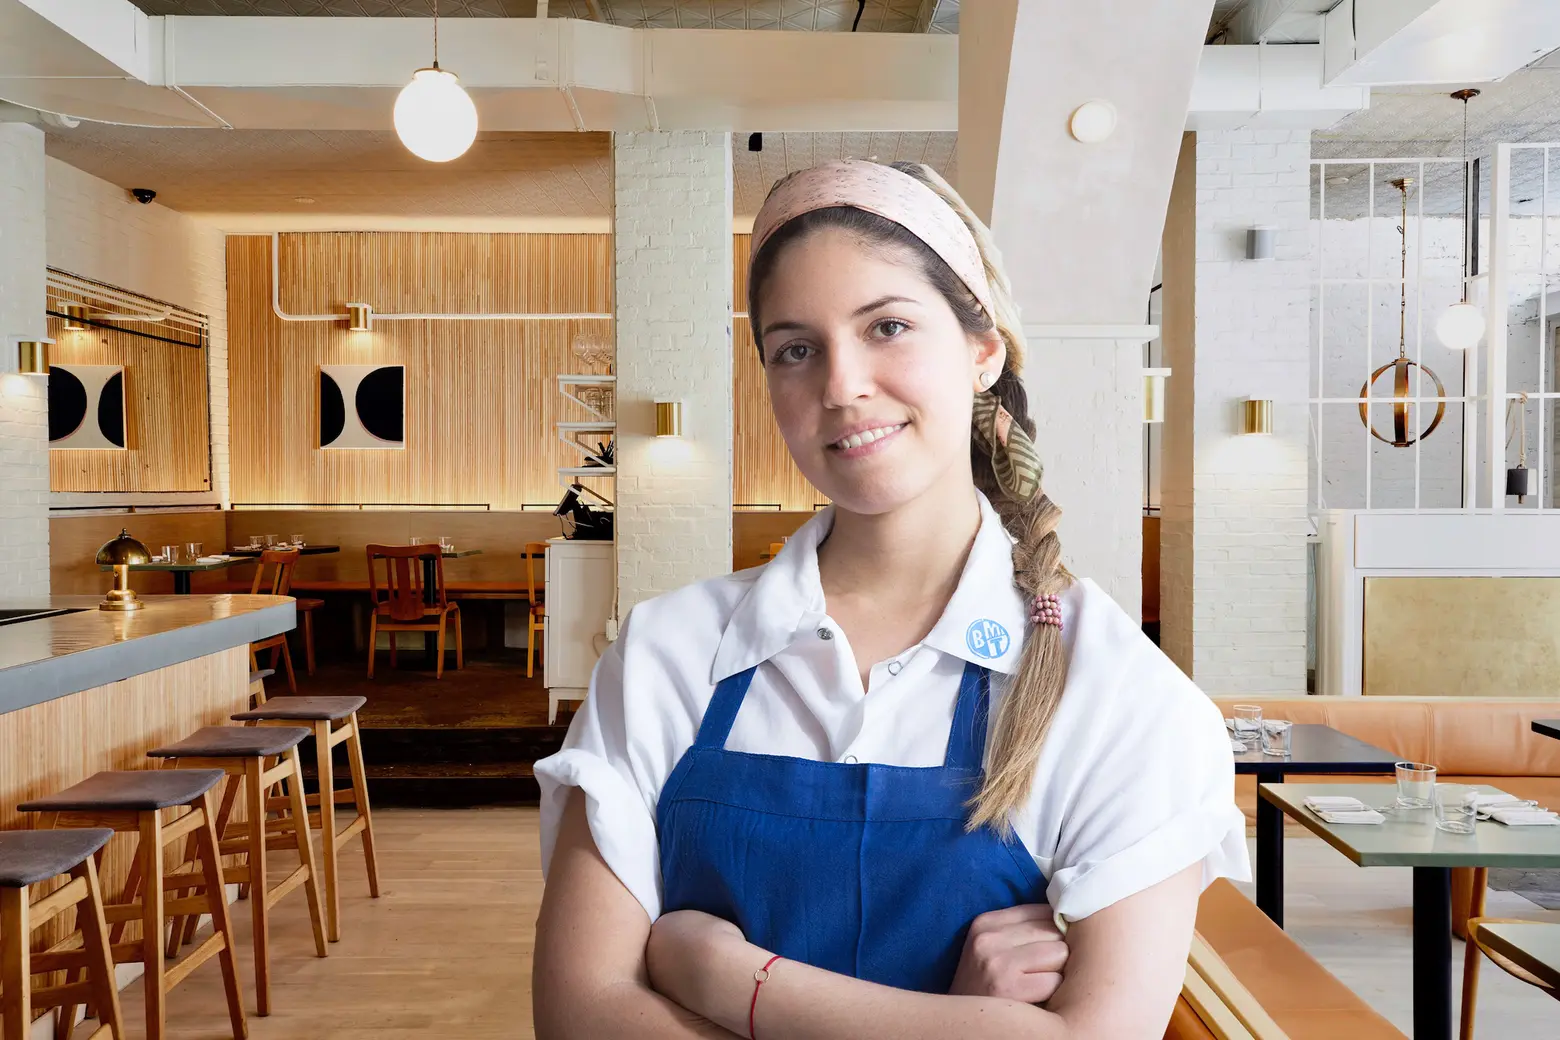 Adriana Urbina brings Venezuelan flavors to Nolita’s De Maria while empowering female chefs